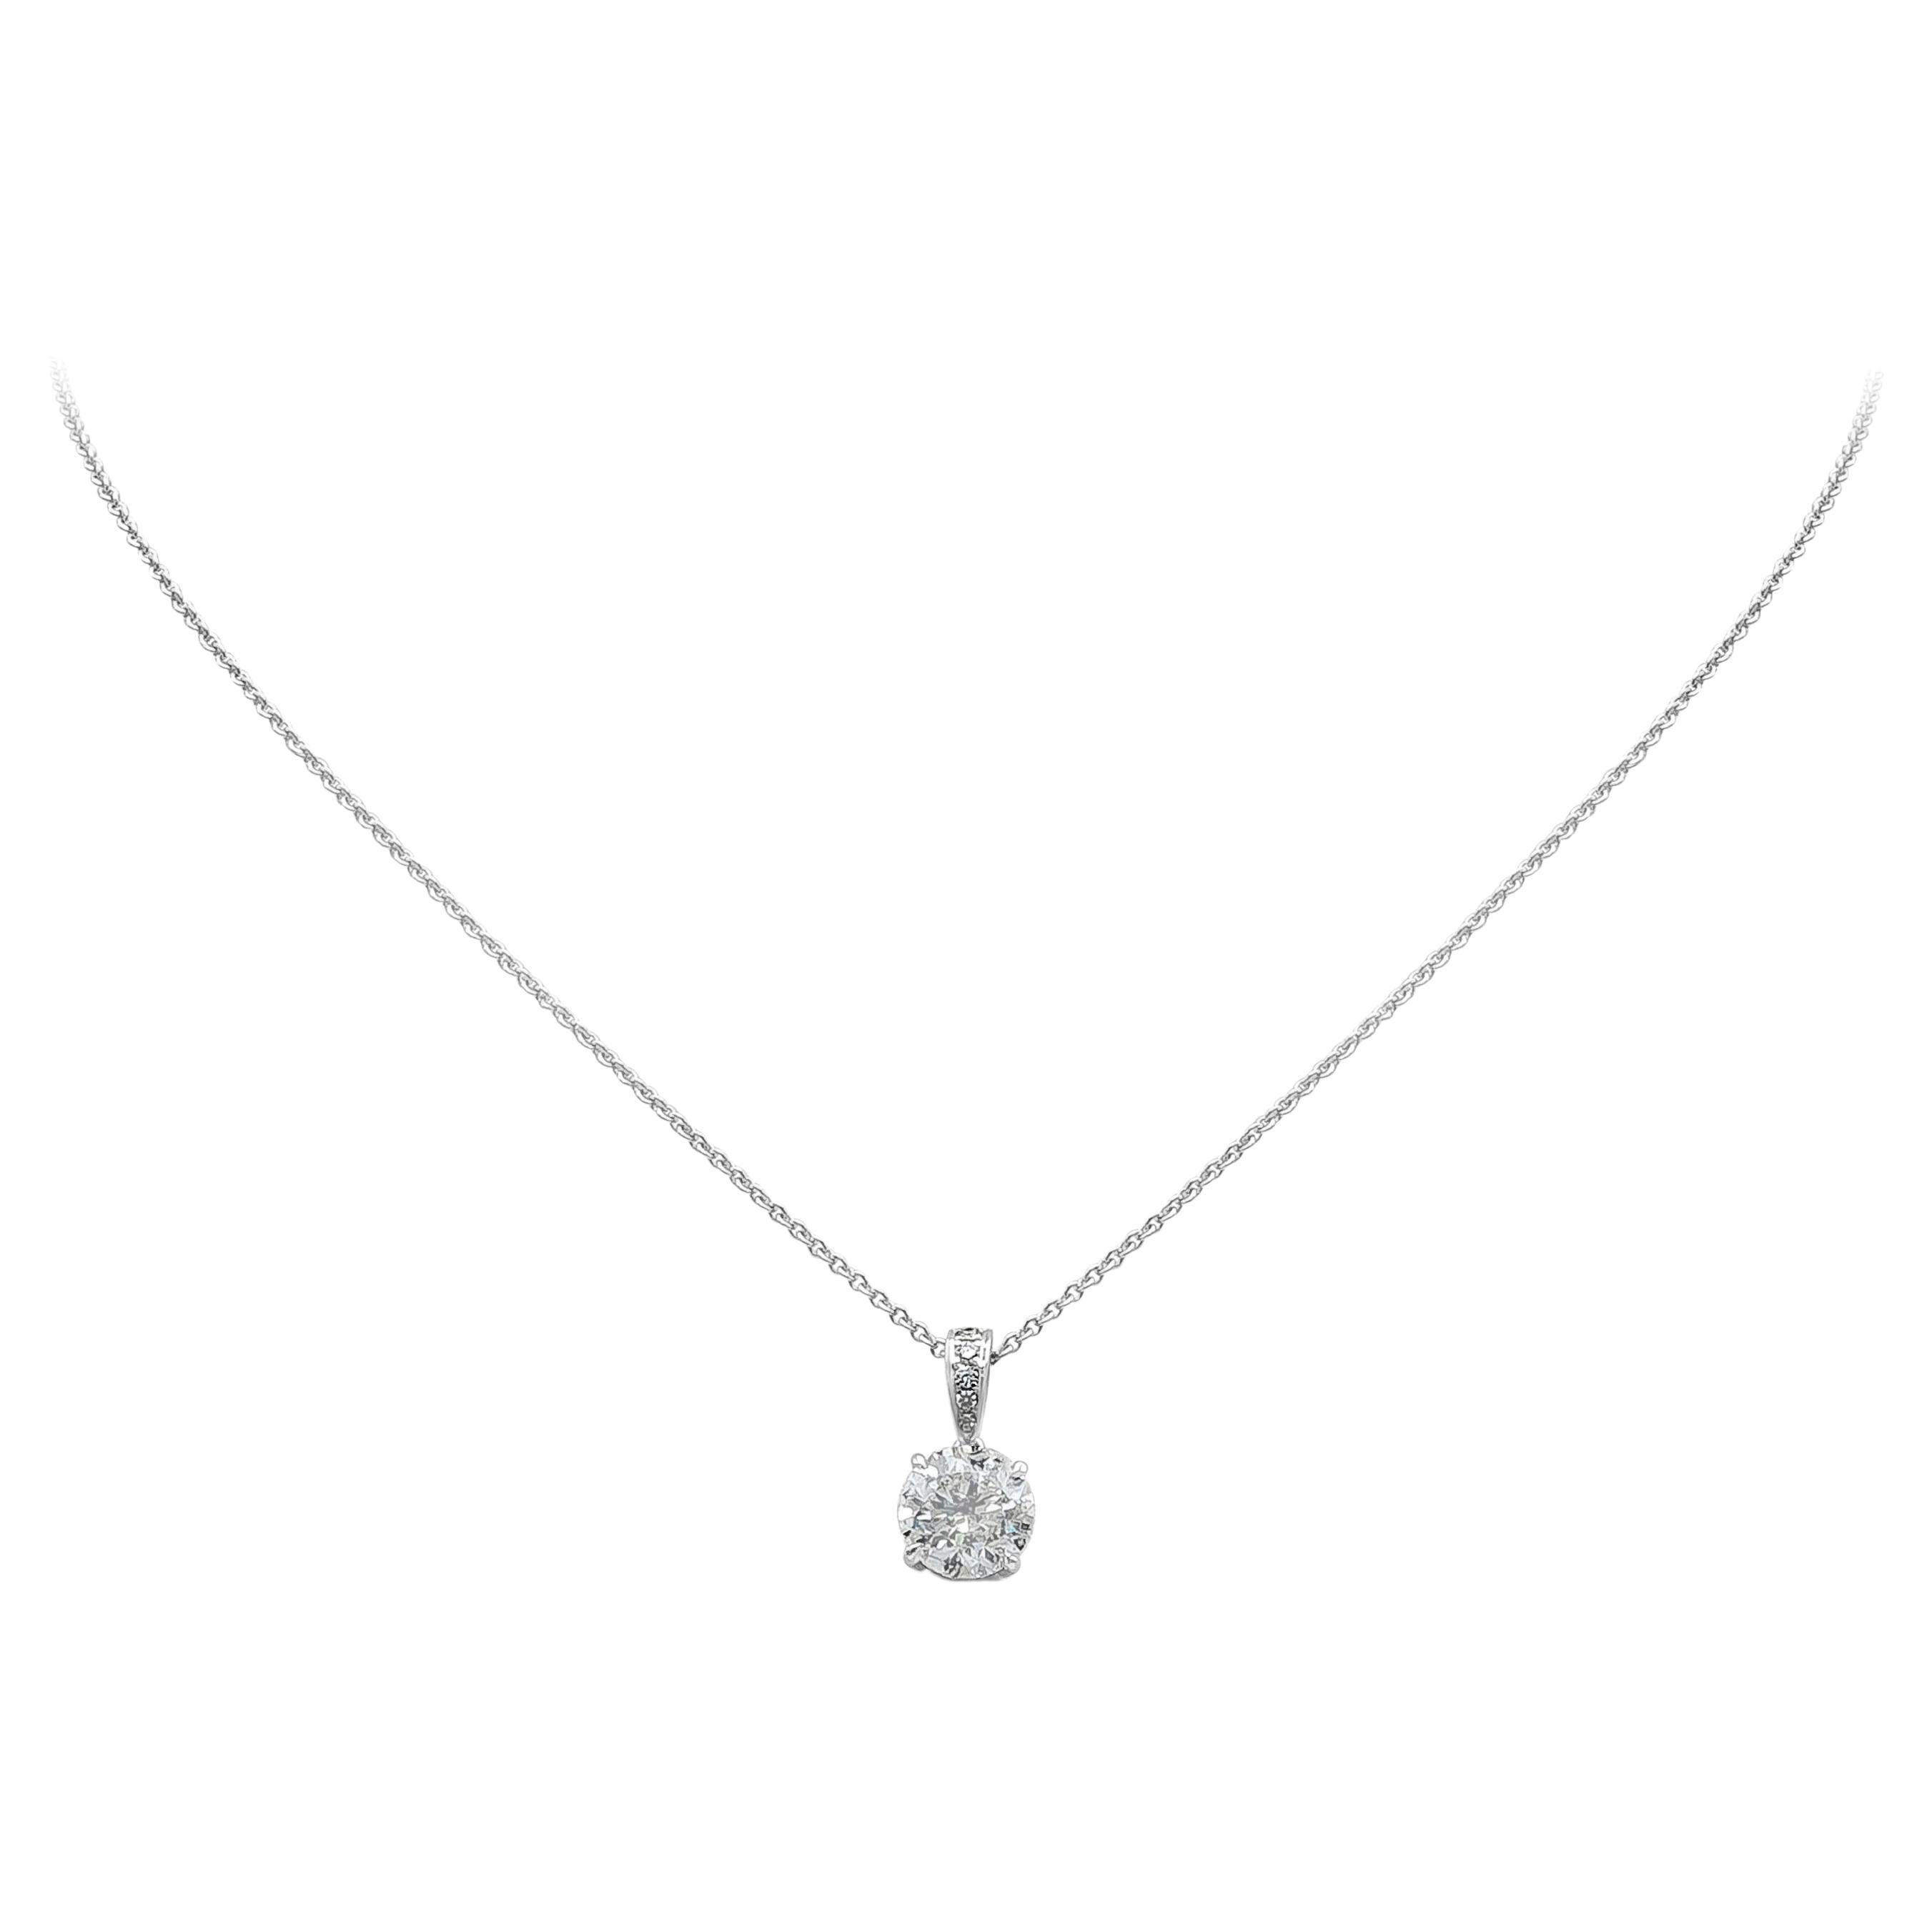 2.27 Carat Brilliant Round Diamond Solitaire Pendant Necklace